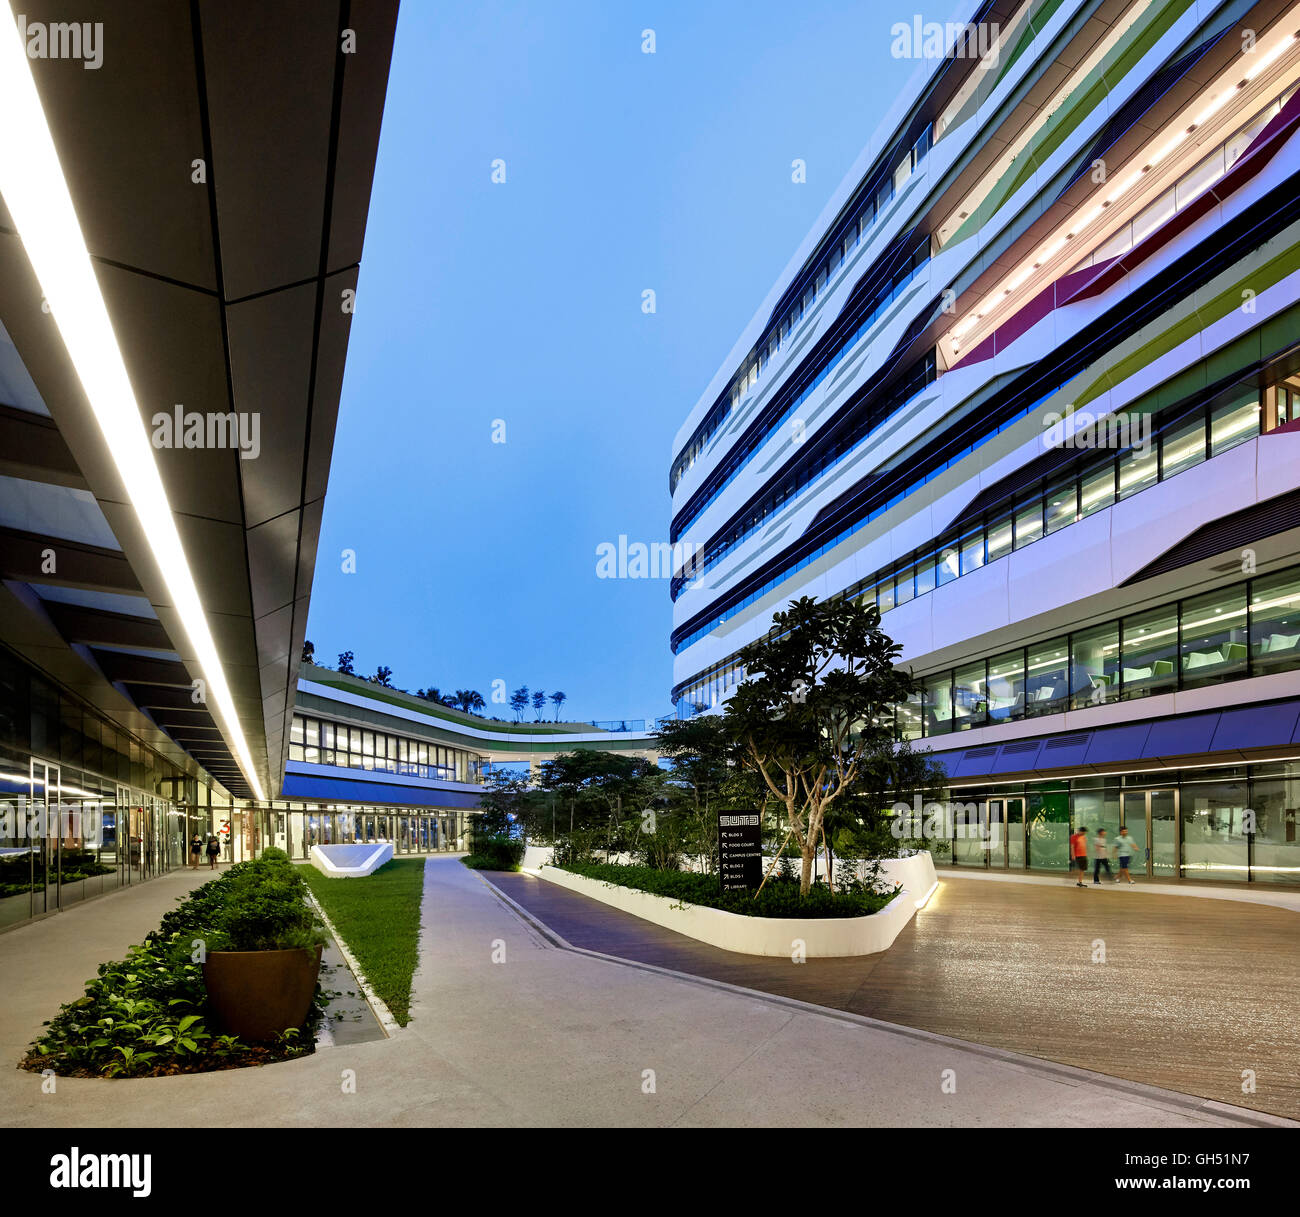 Illuminated exterior circulation spaces. Singapore University of Technology and Design, Singapore, Singapore. Architect: UNStudio, 2015. Stock Photo